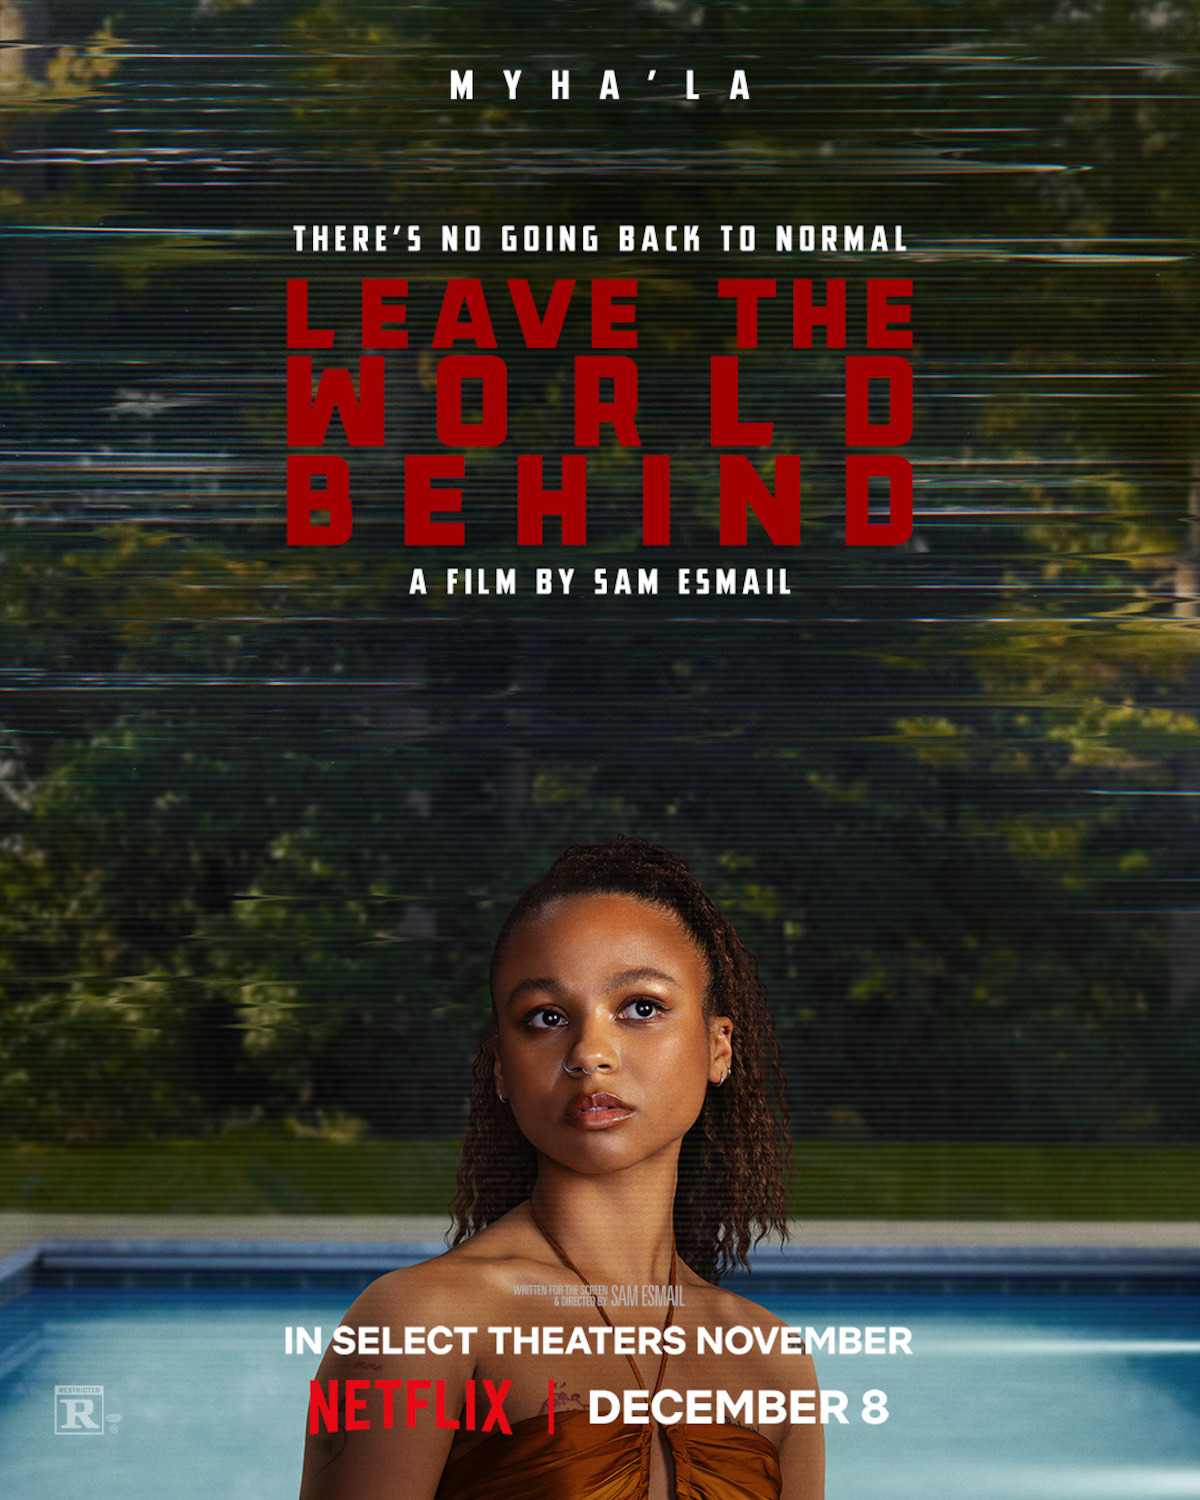 Leave the World Behind: Cast, Release Date, Trailer & Plot of Julia Roberts  Movie - Netflix Tudum